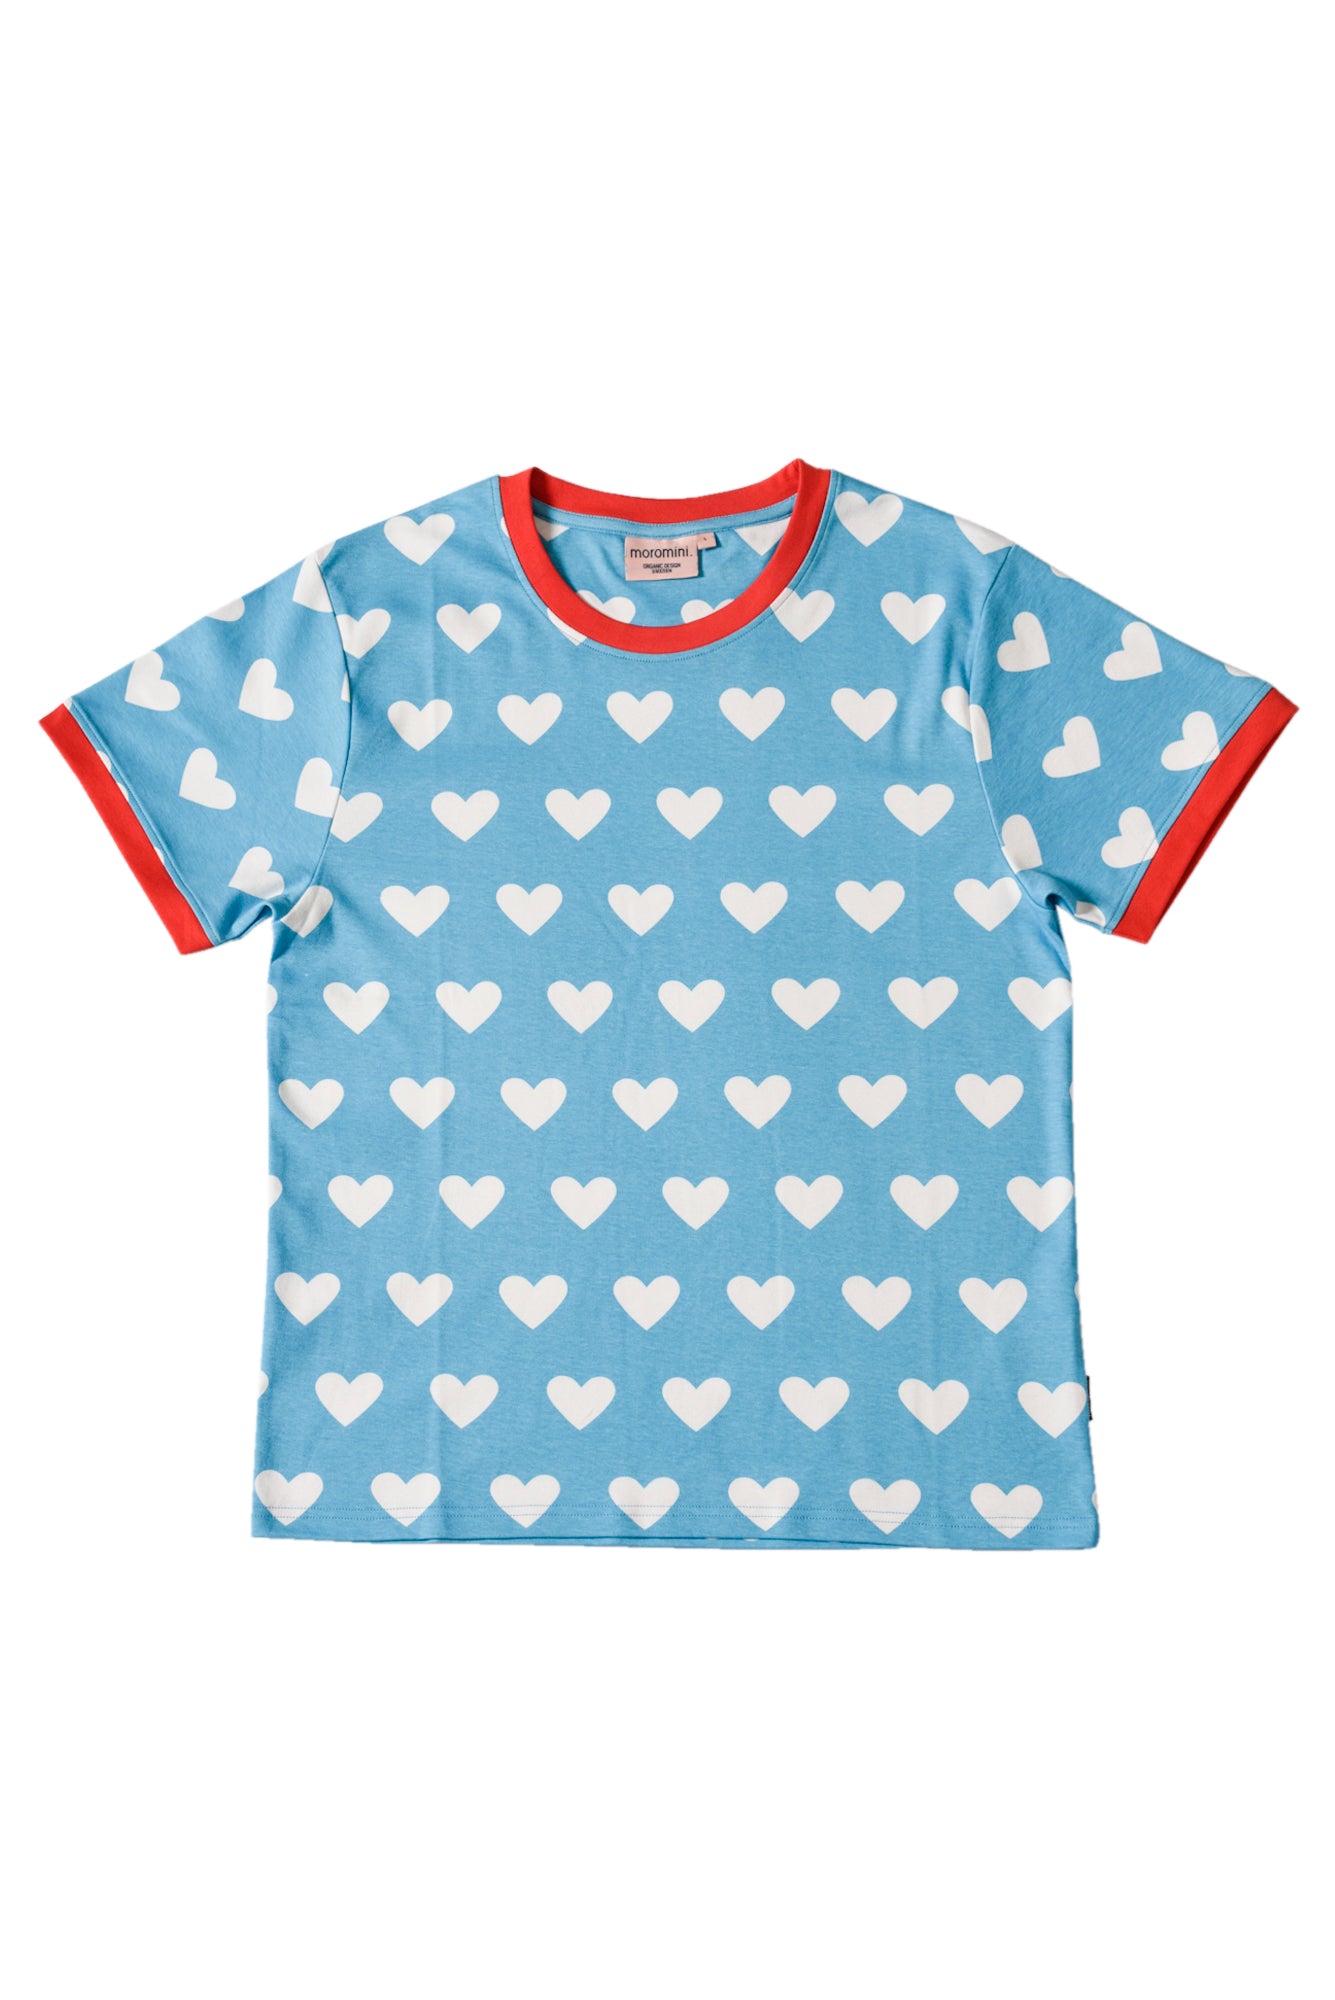 Moromini Short Sleeve T-shirt - Blue Hearts